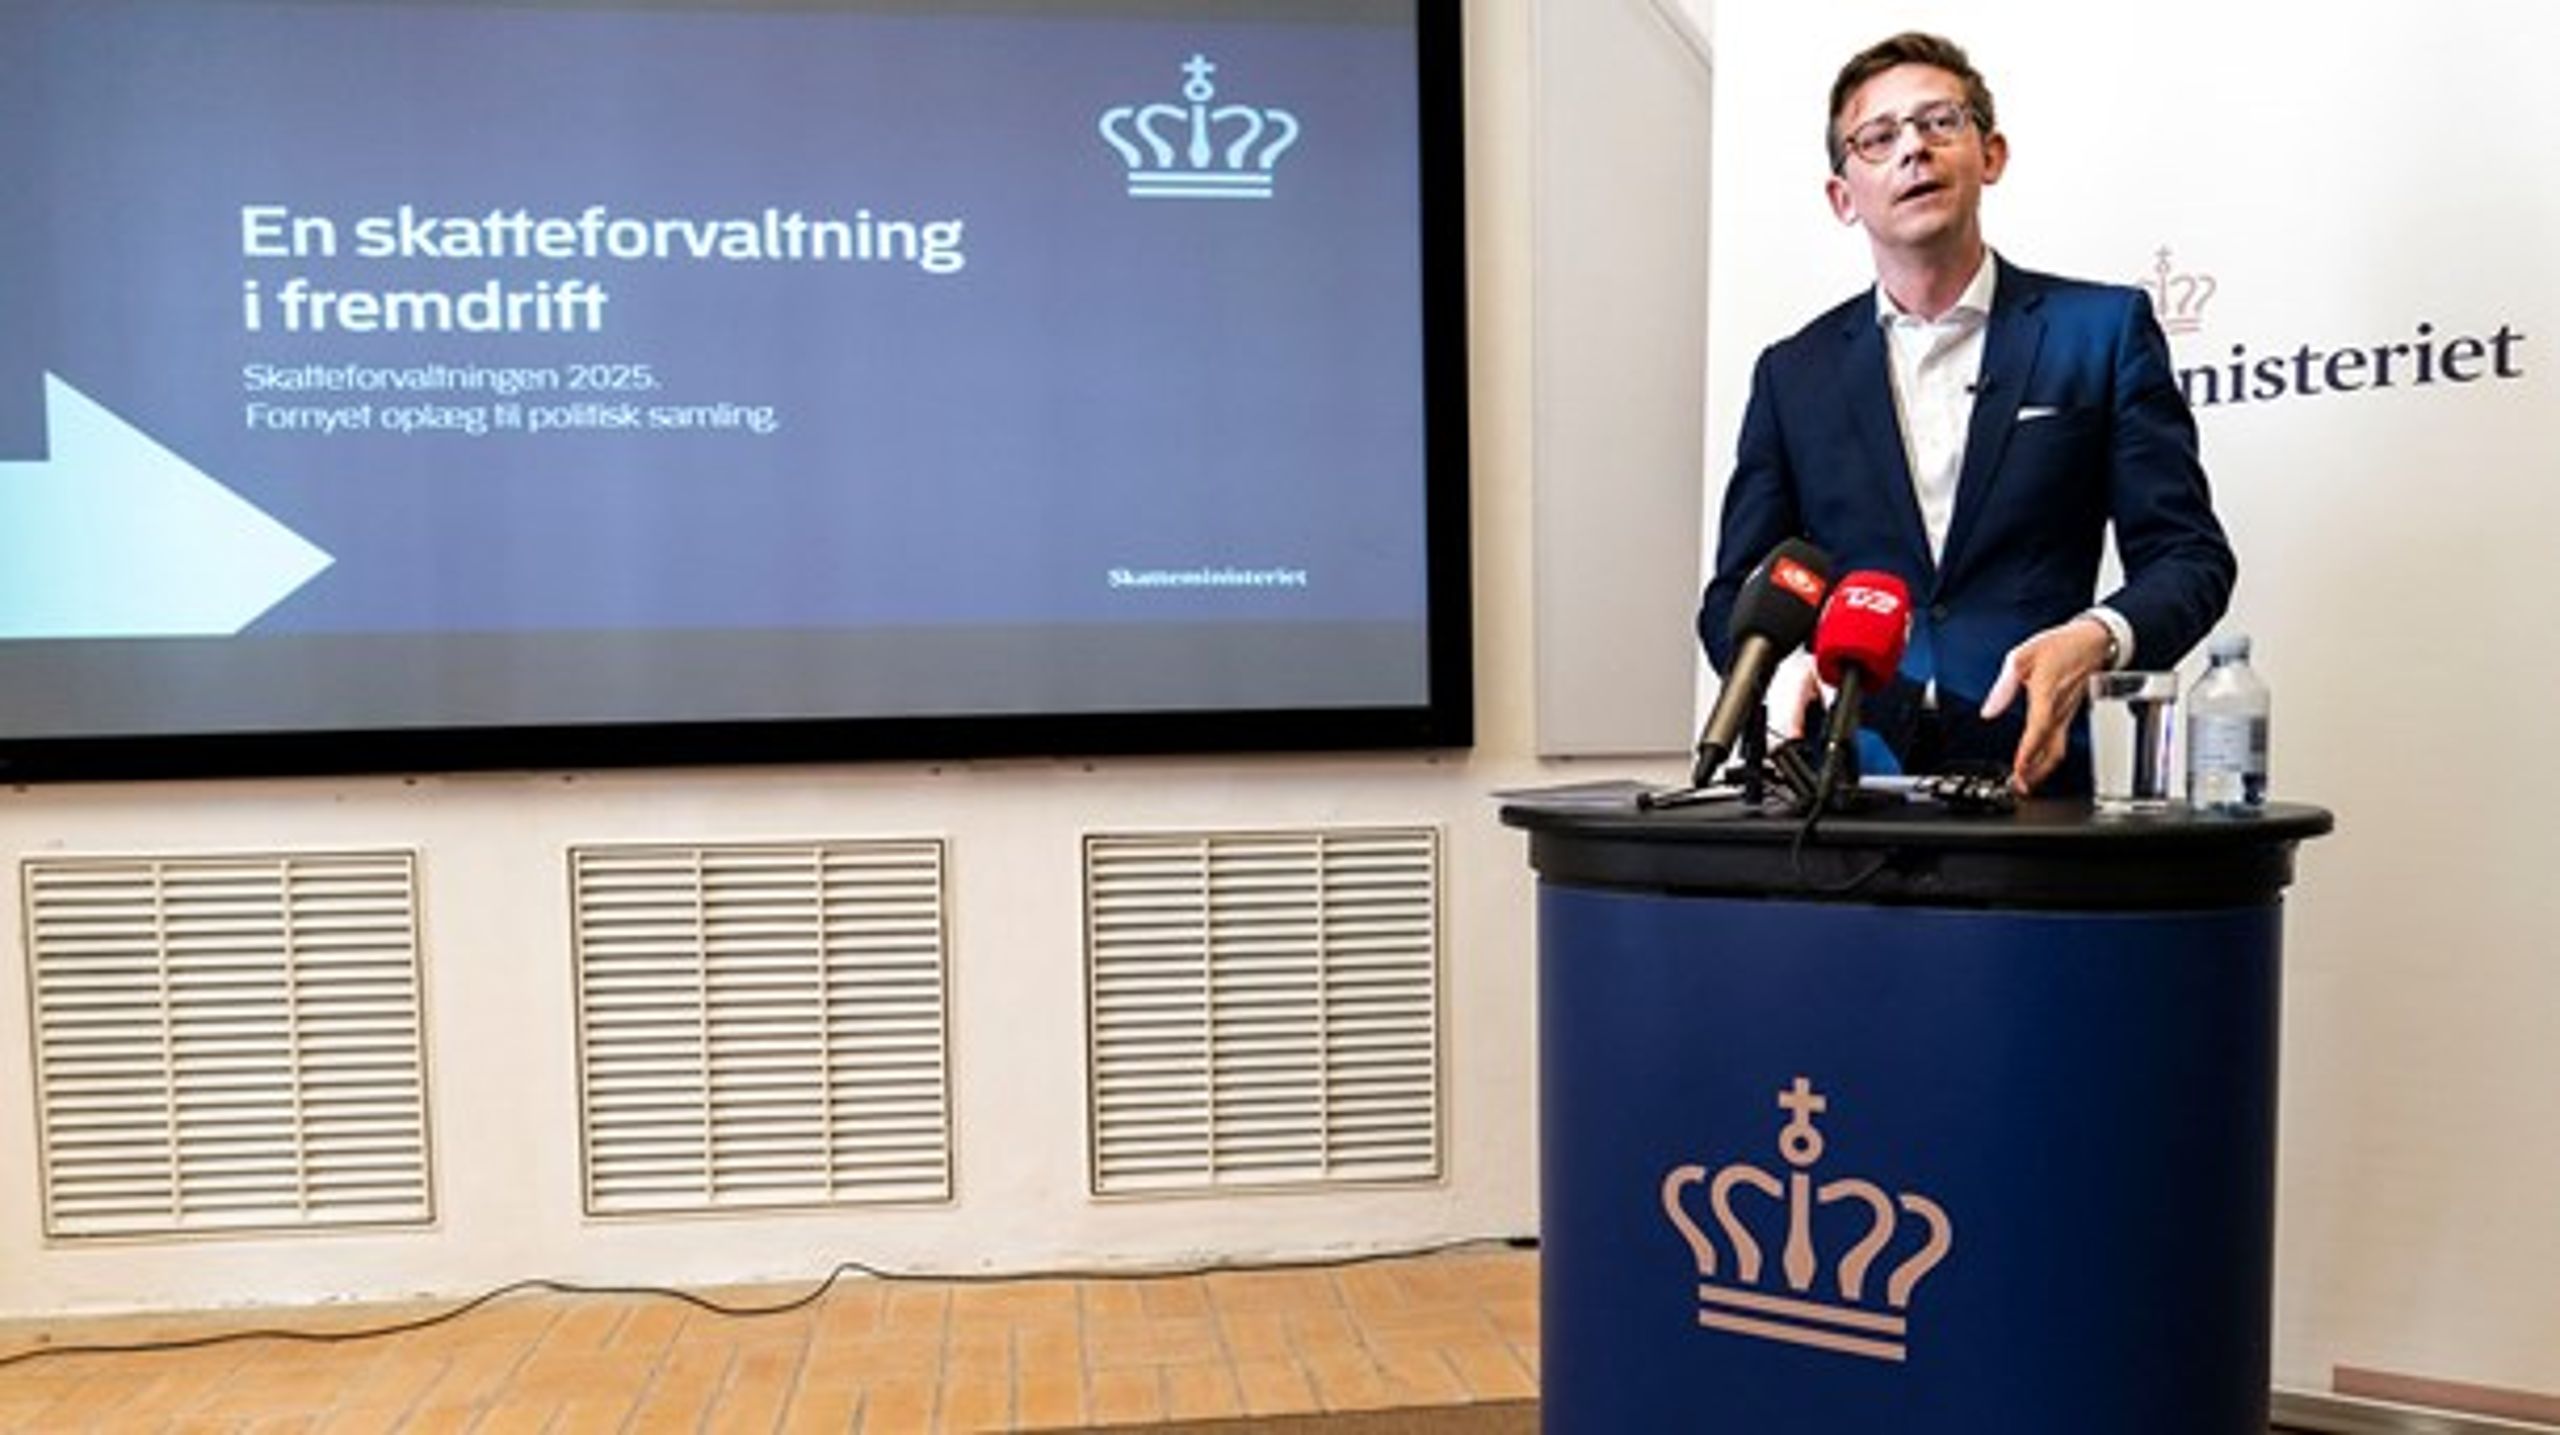 Skatteminister Karsten Lauritzen fremlagde tirsdag oplægget "En skatteforvaltning i fremdrift".&nbsp;